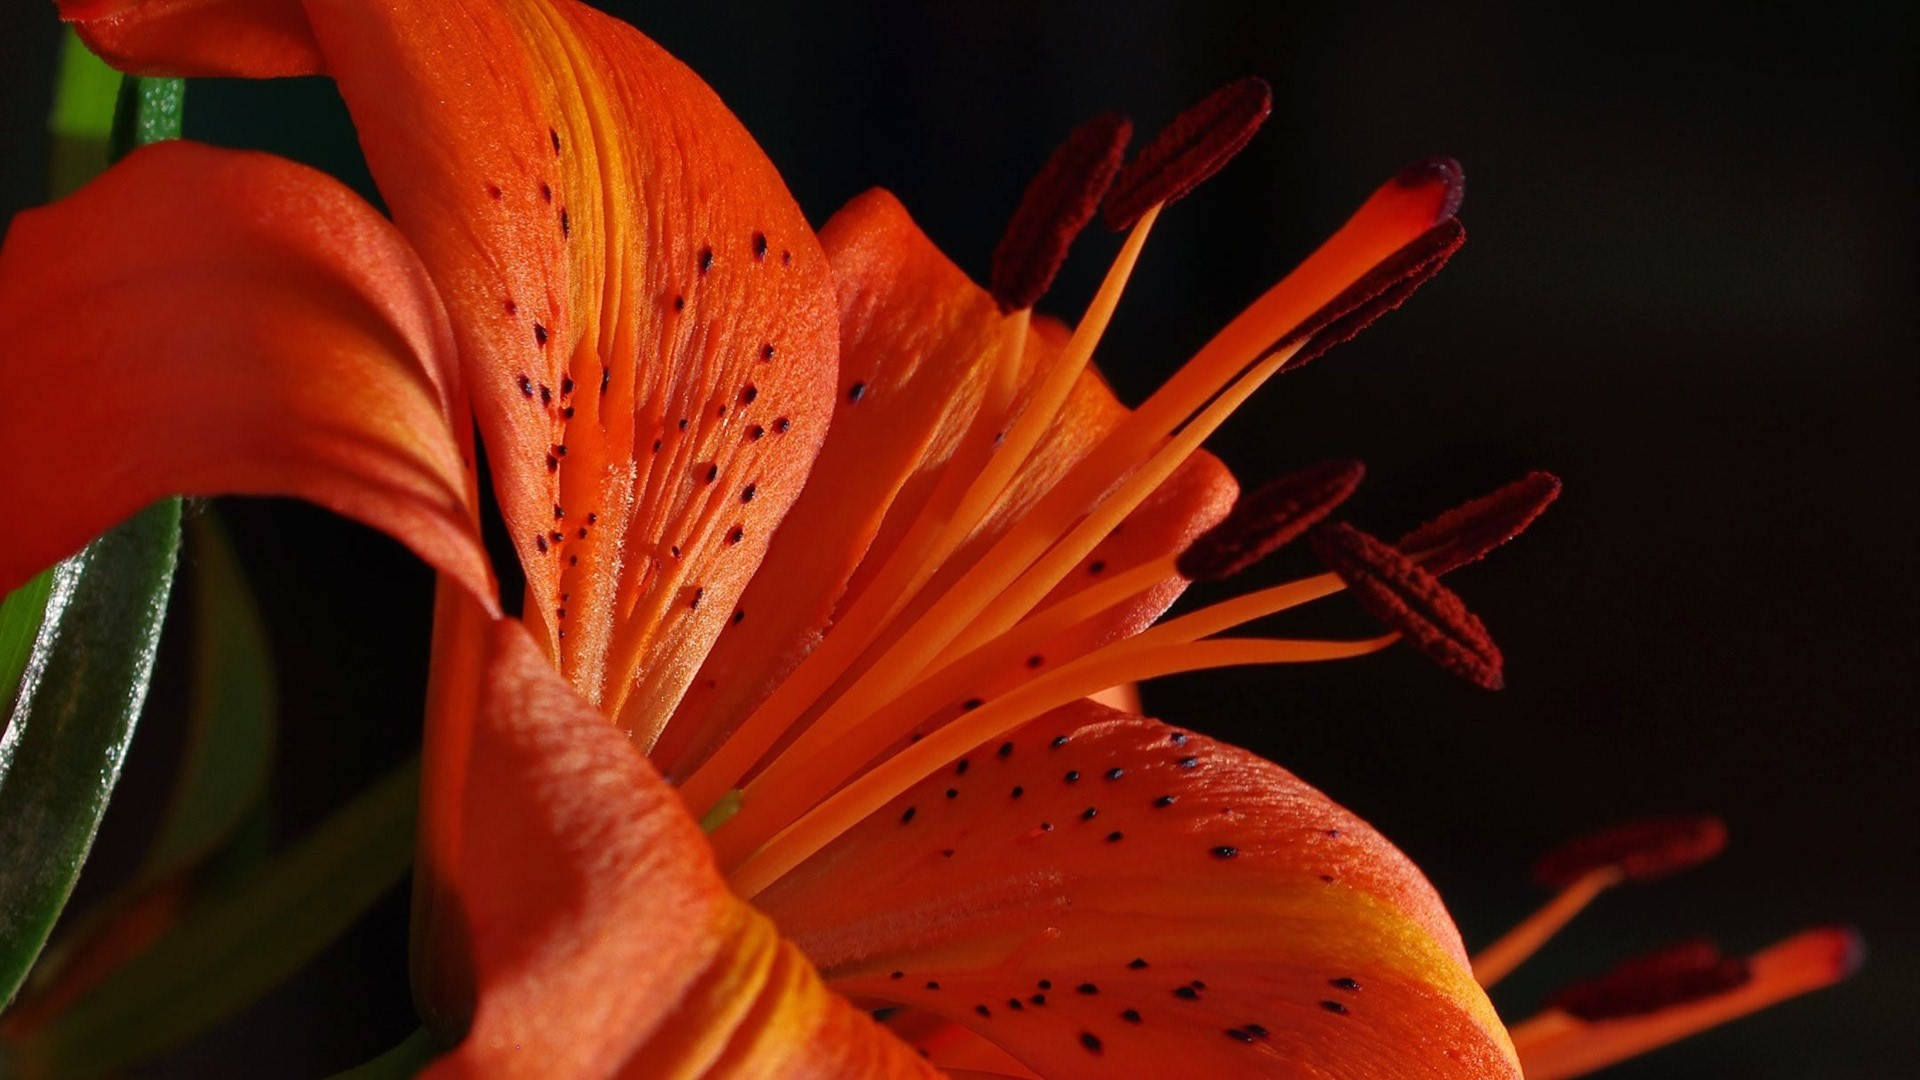 Radiant Orange Lily Close-Up Wallpaper